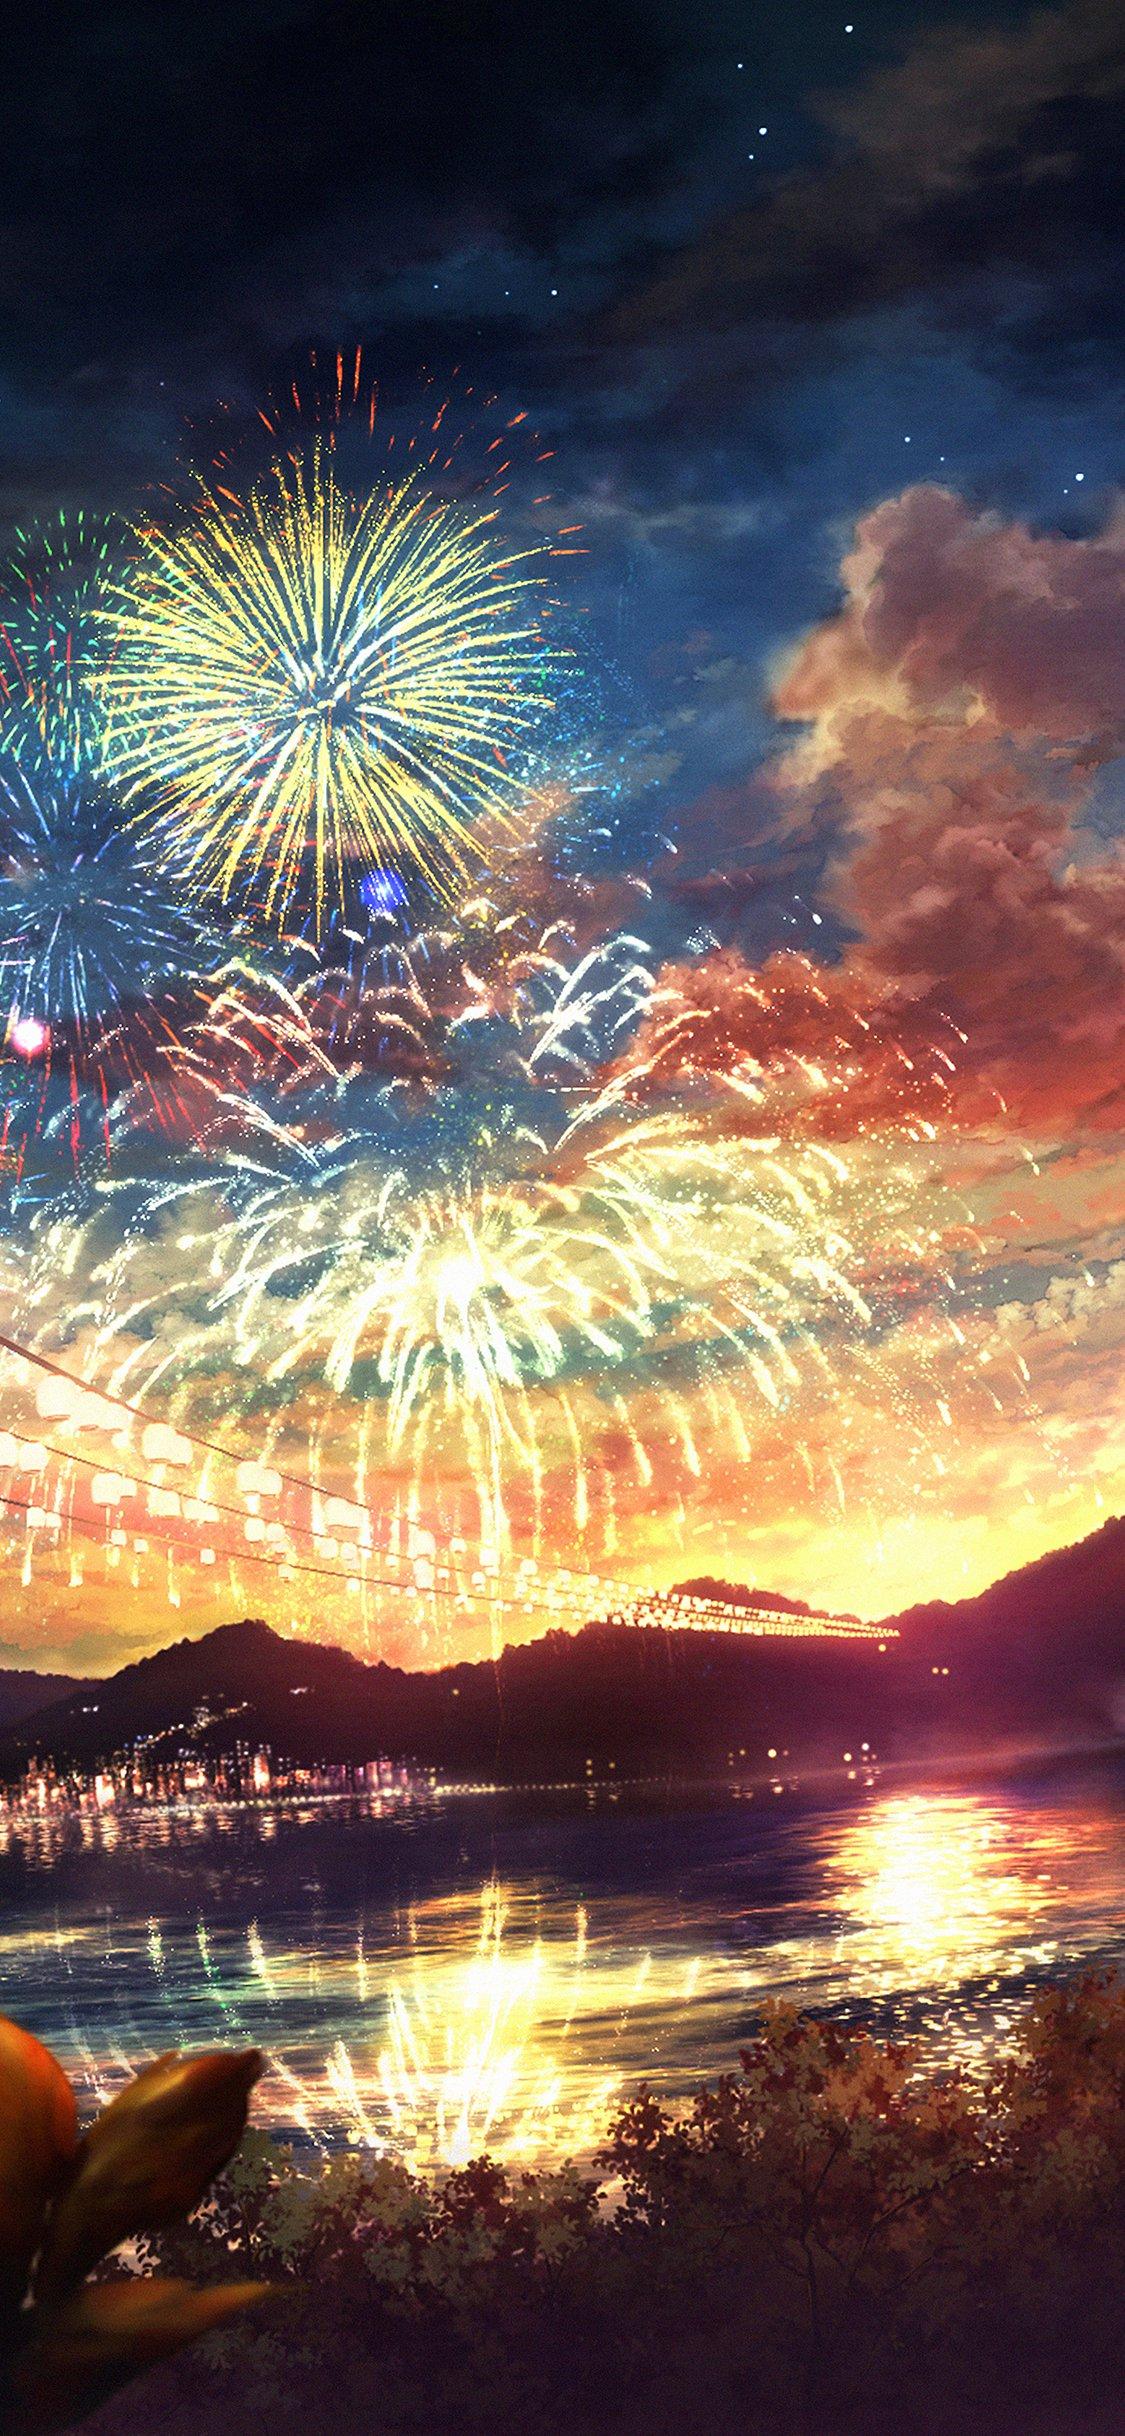 Firework dark night anime iPhone X Wallpaper Free Download